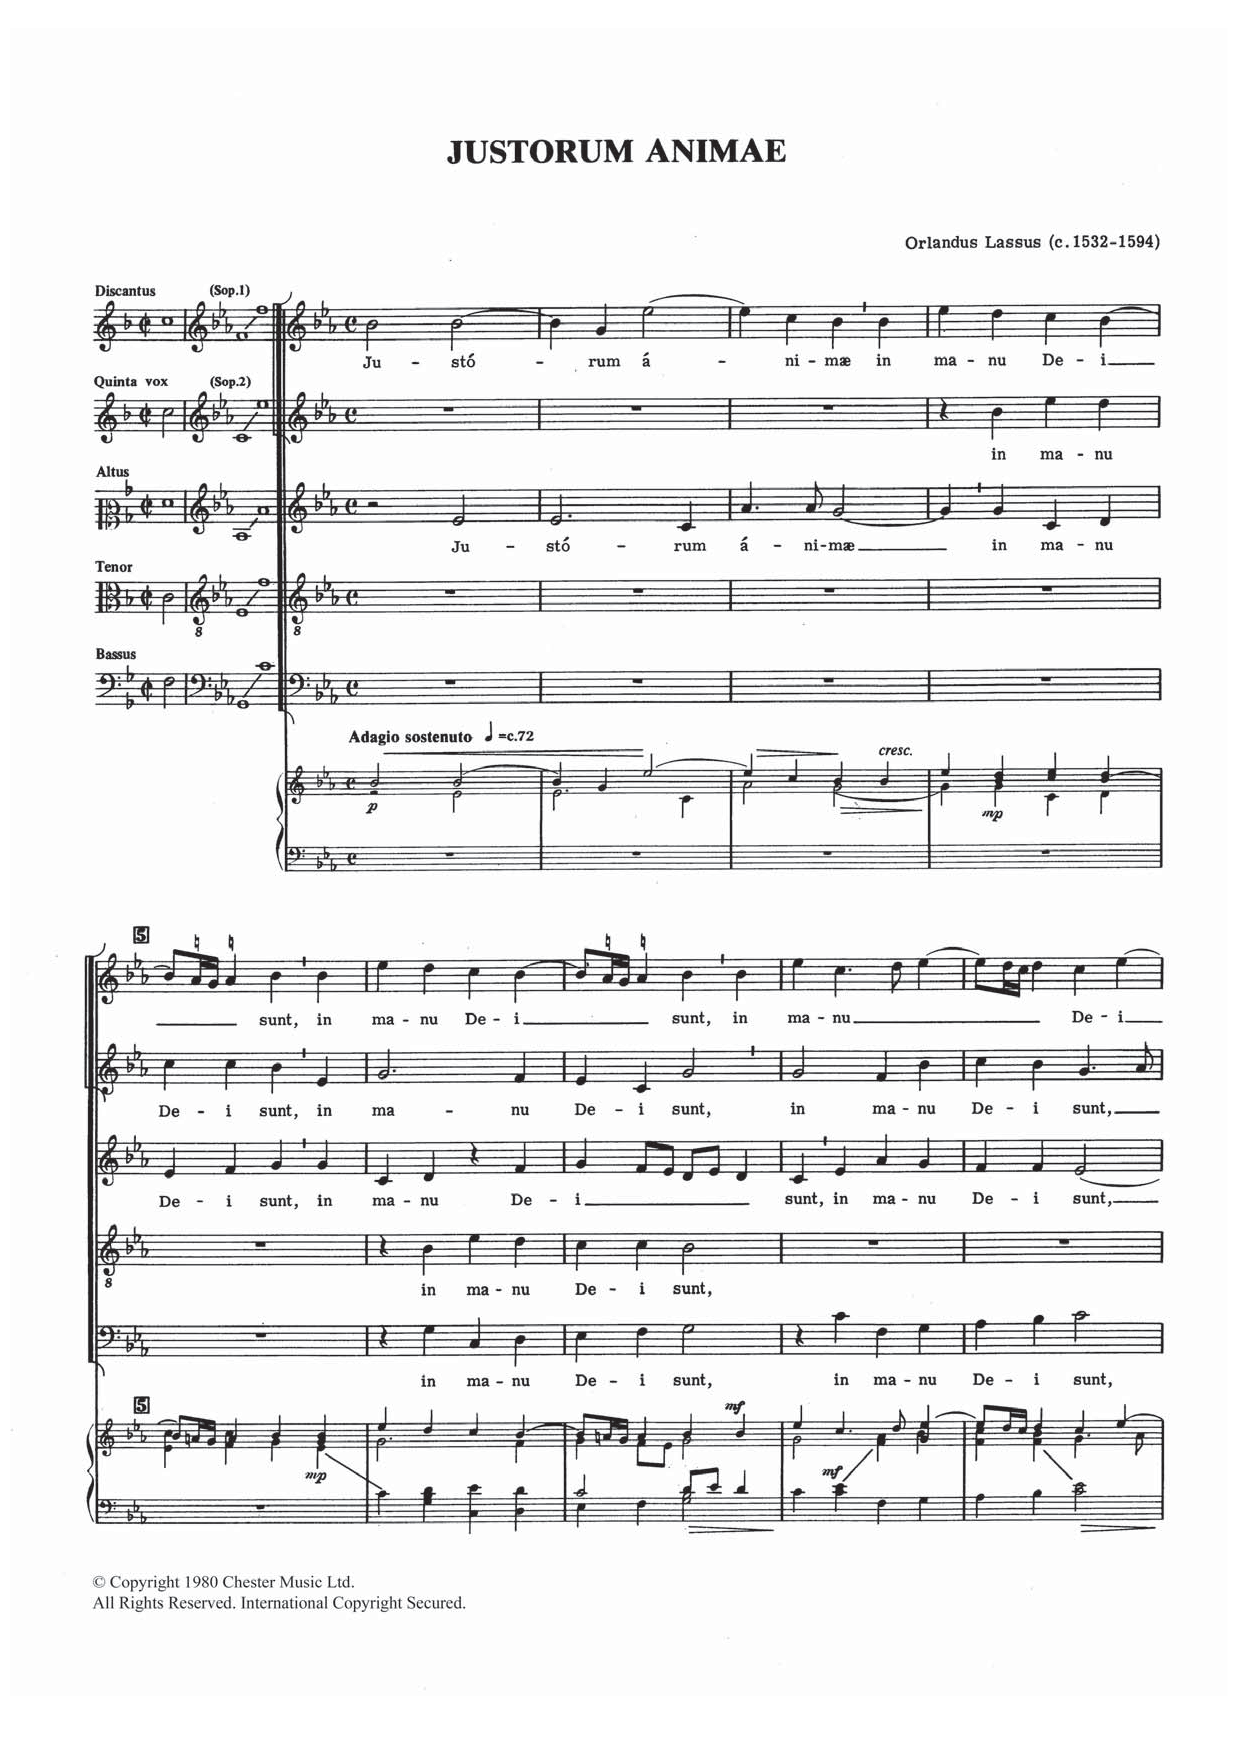 Orlandus Lassus Justorum Animae Sheet Music Notes & Chords for Choral SSATB - Download or Print PDF